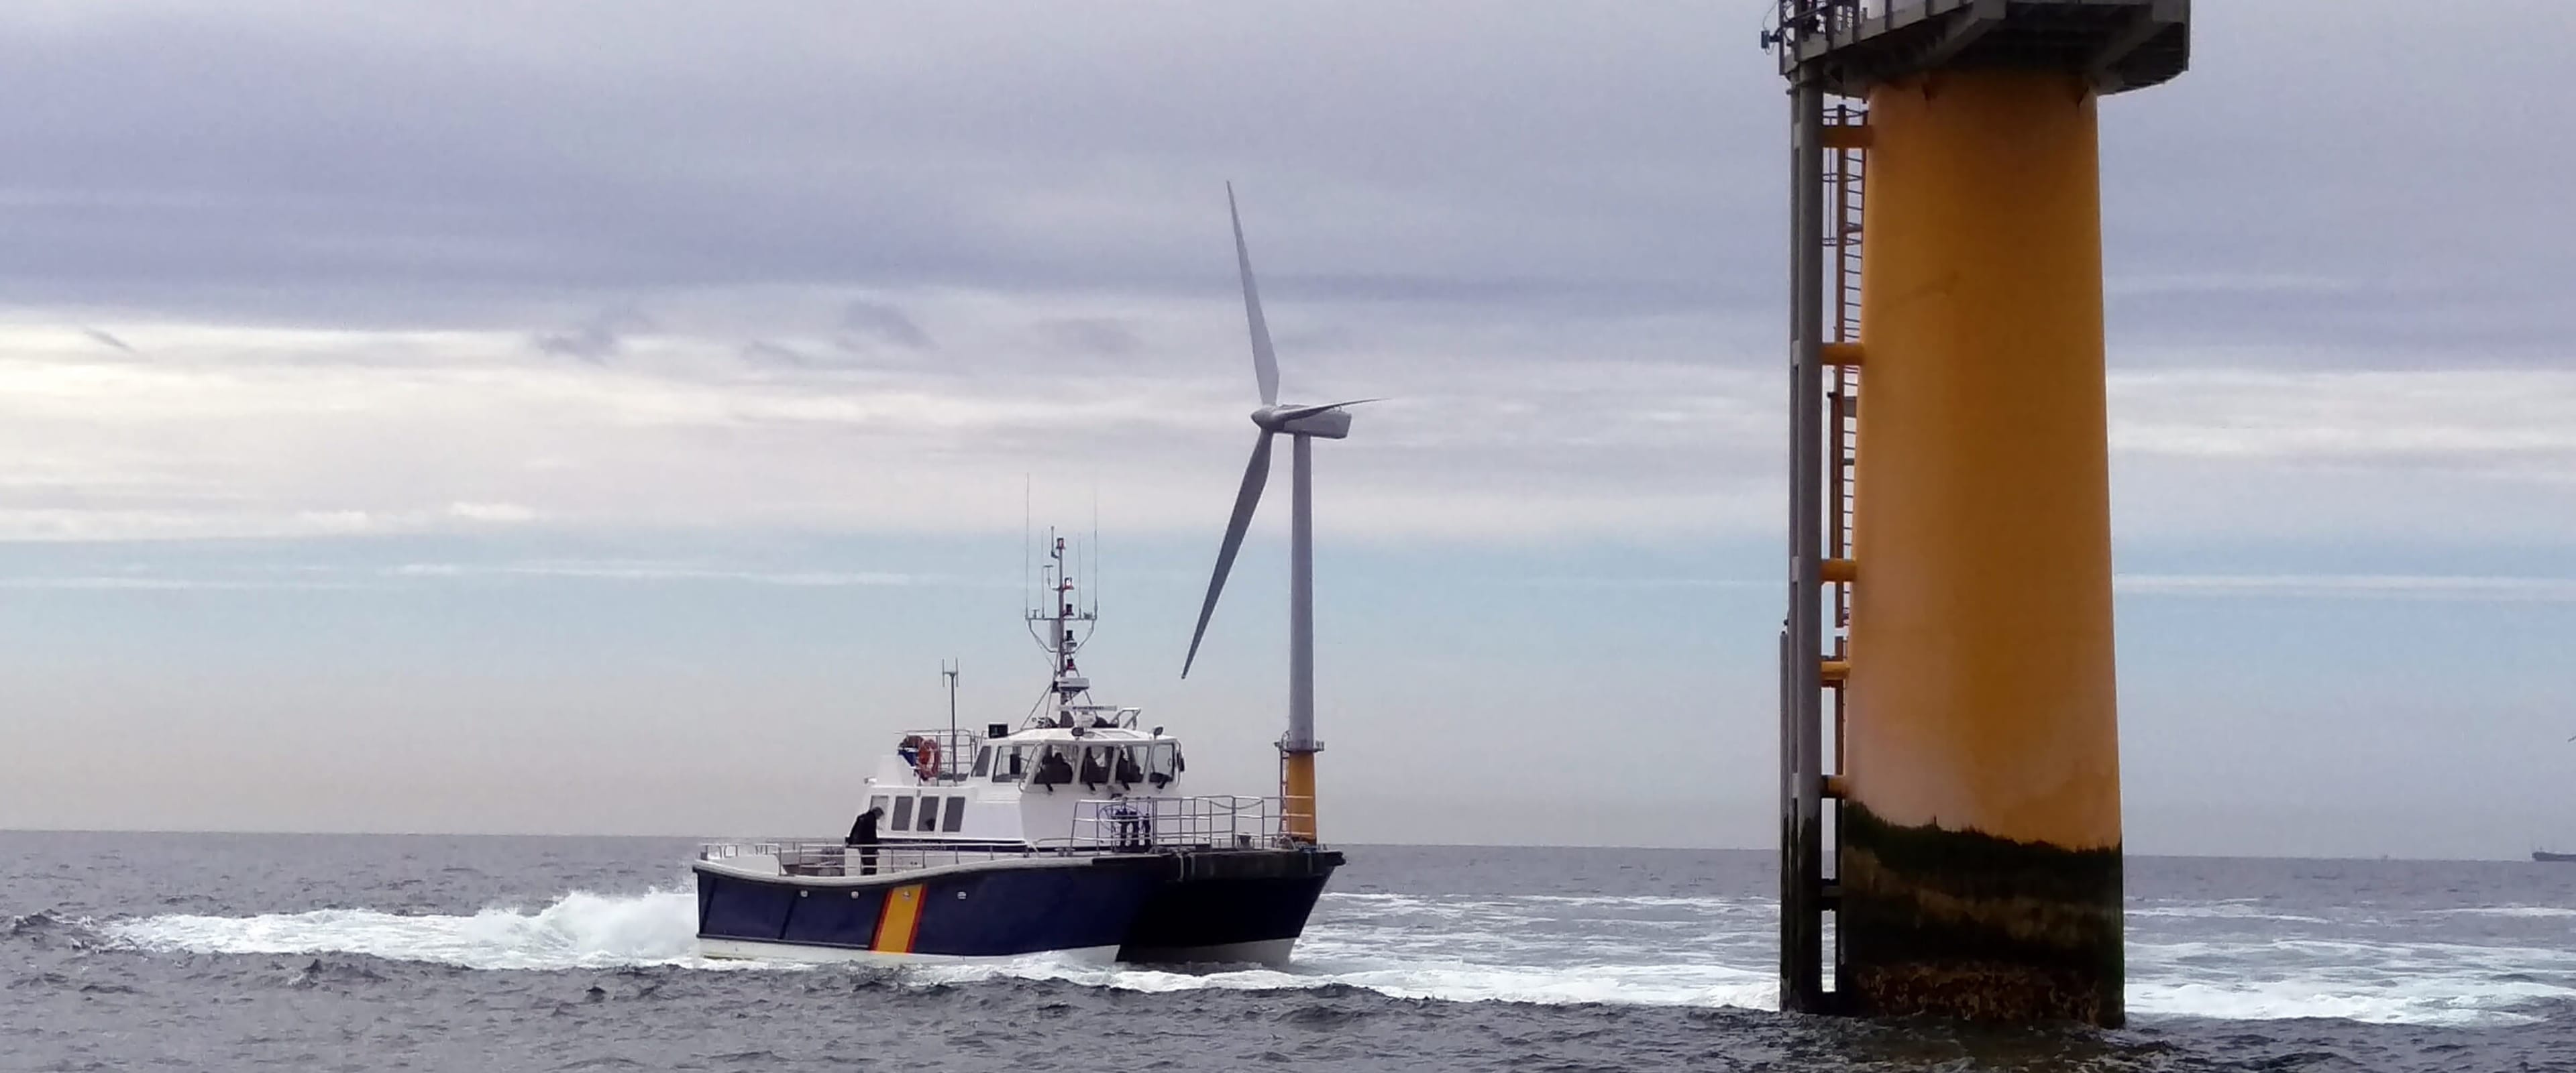 windfarm support vessel 07275 (1)